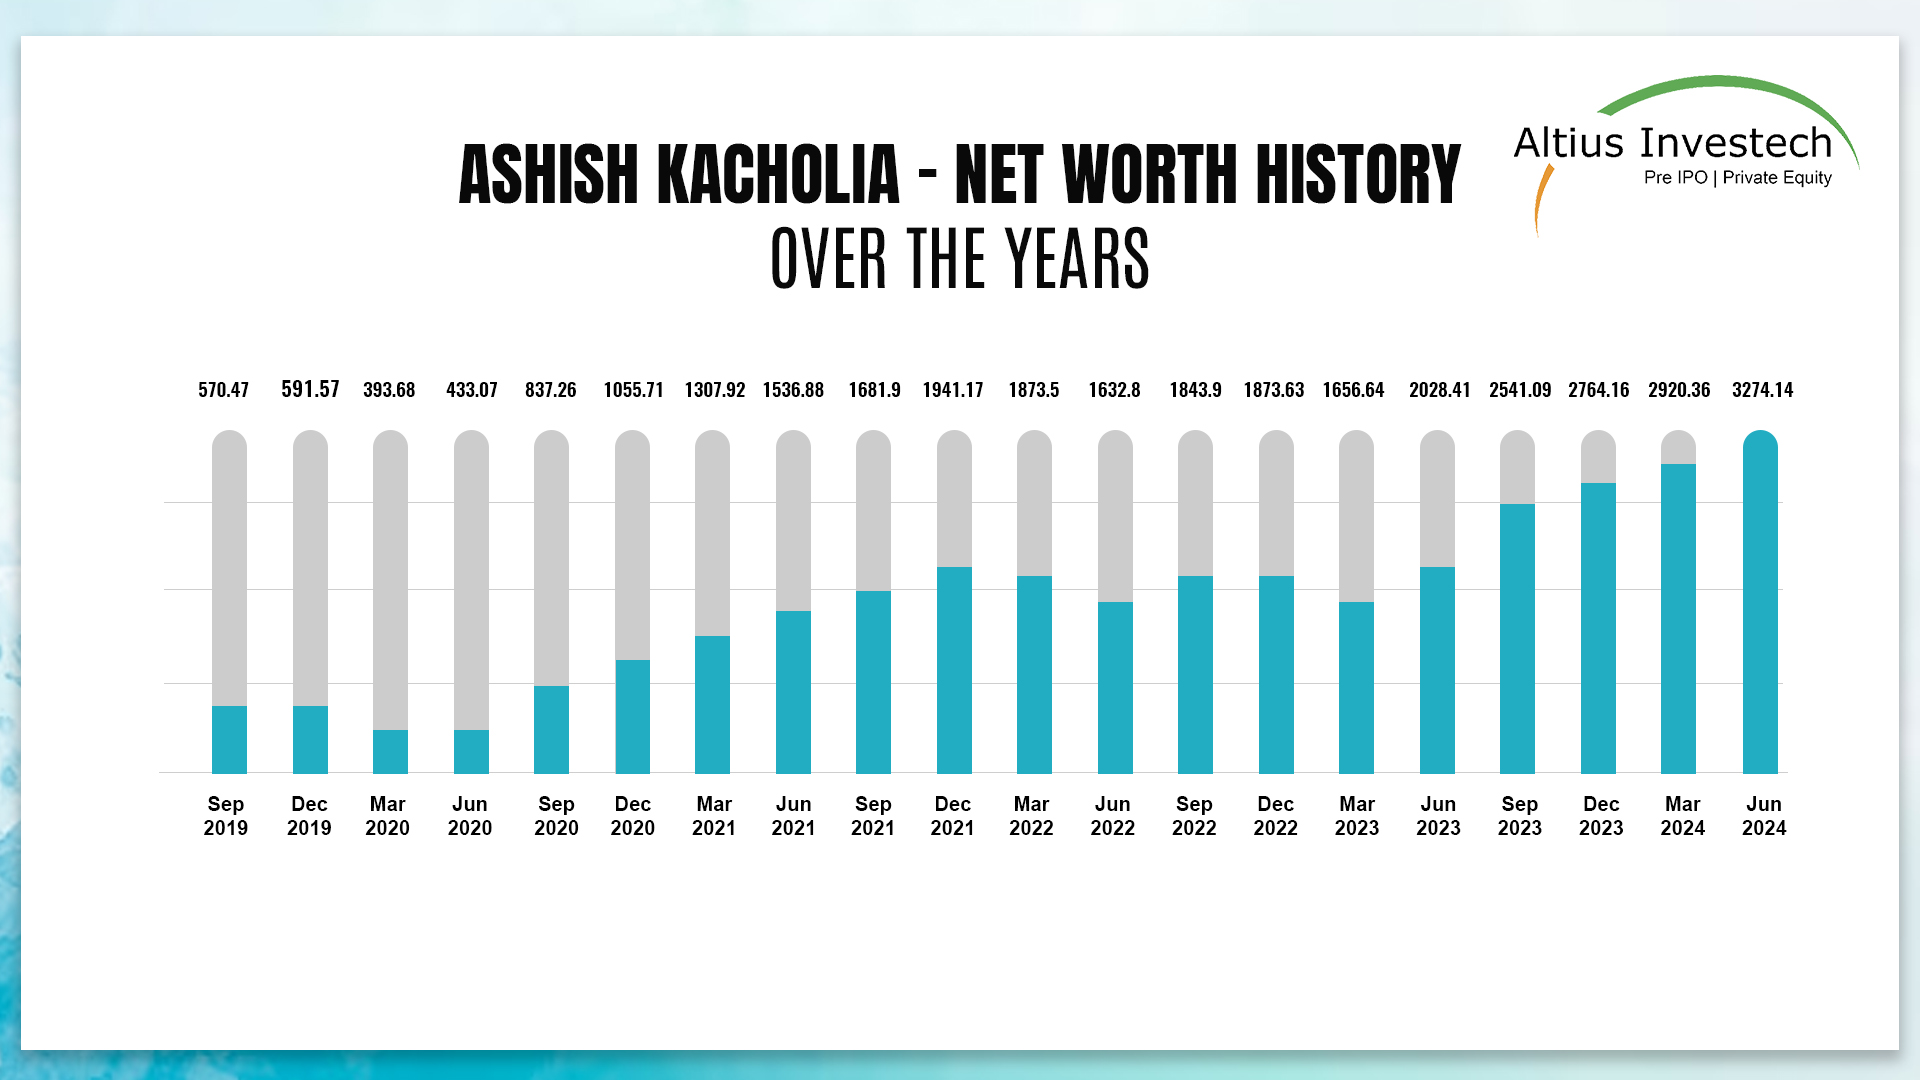 Ashish Kacholia net worth history over the year.